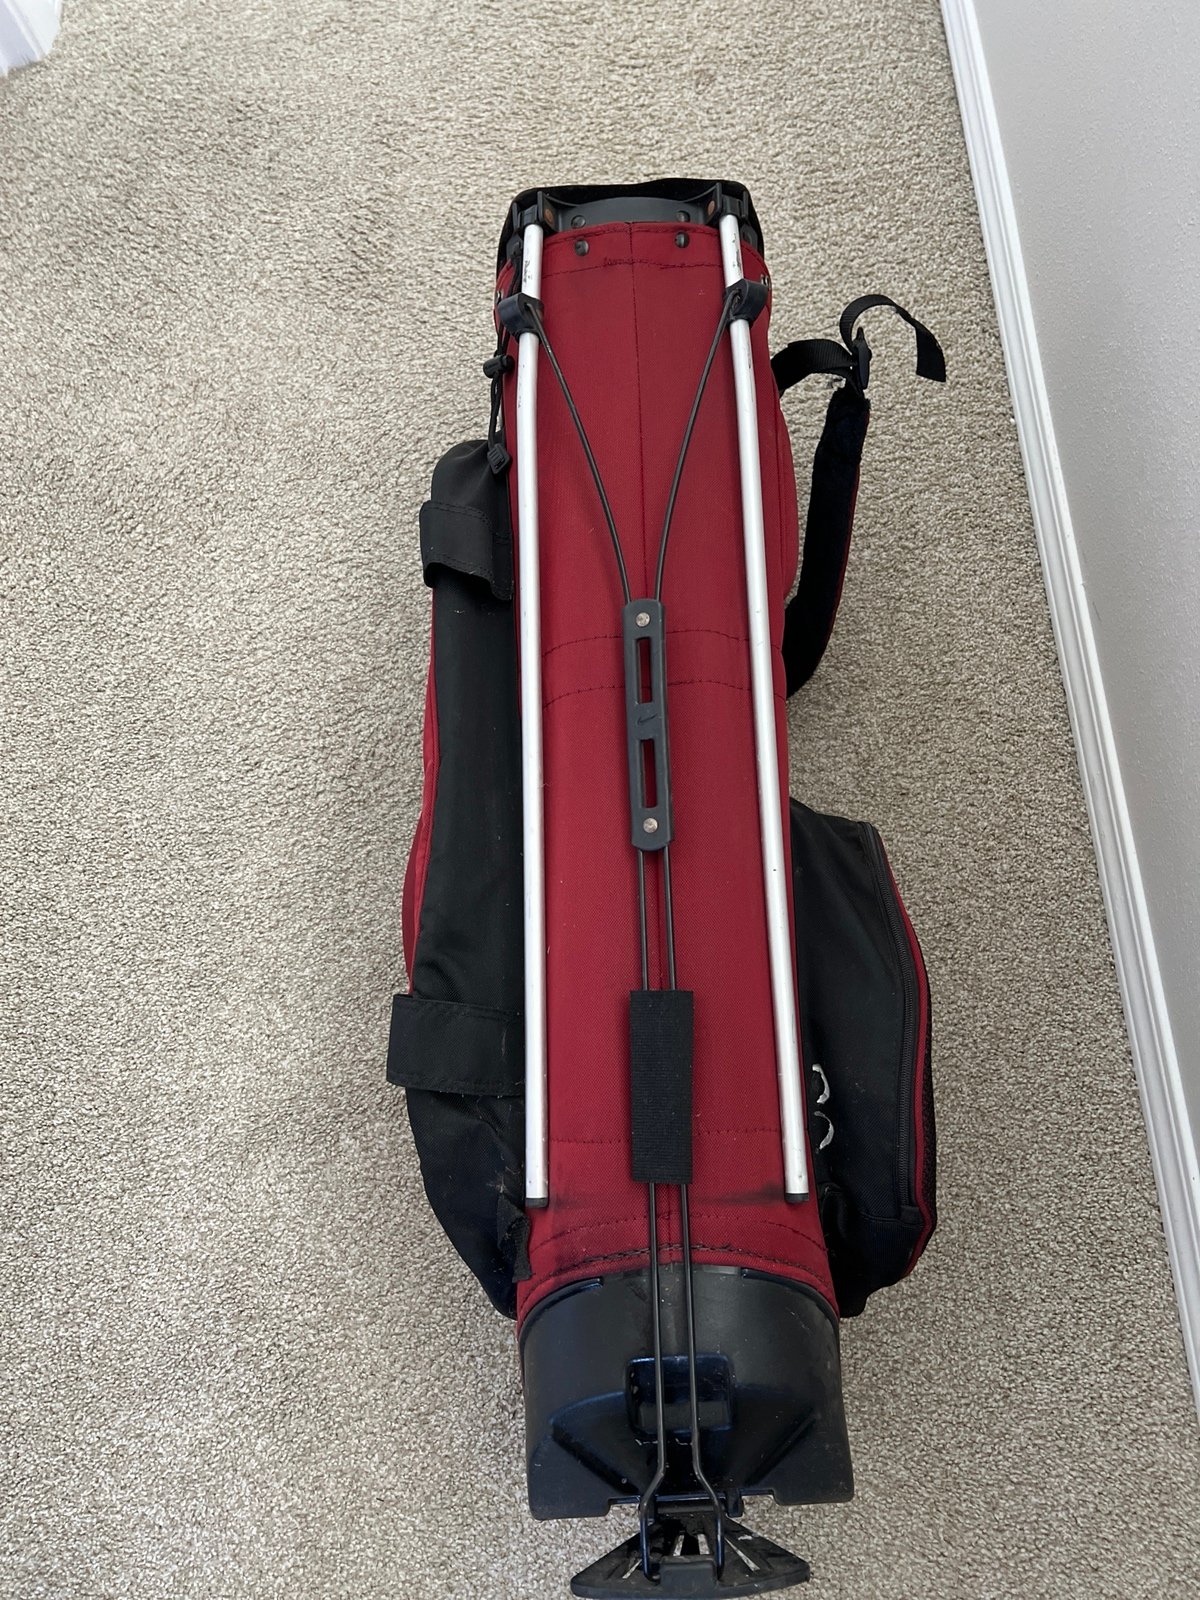 Nike Golf Bag Ozzie Red  Carry/Stand 3wxXoVina